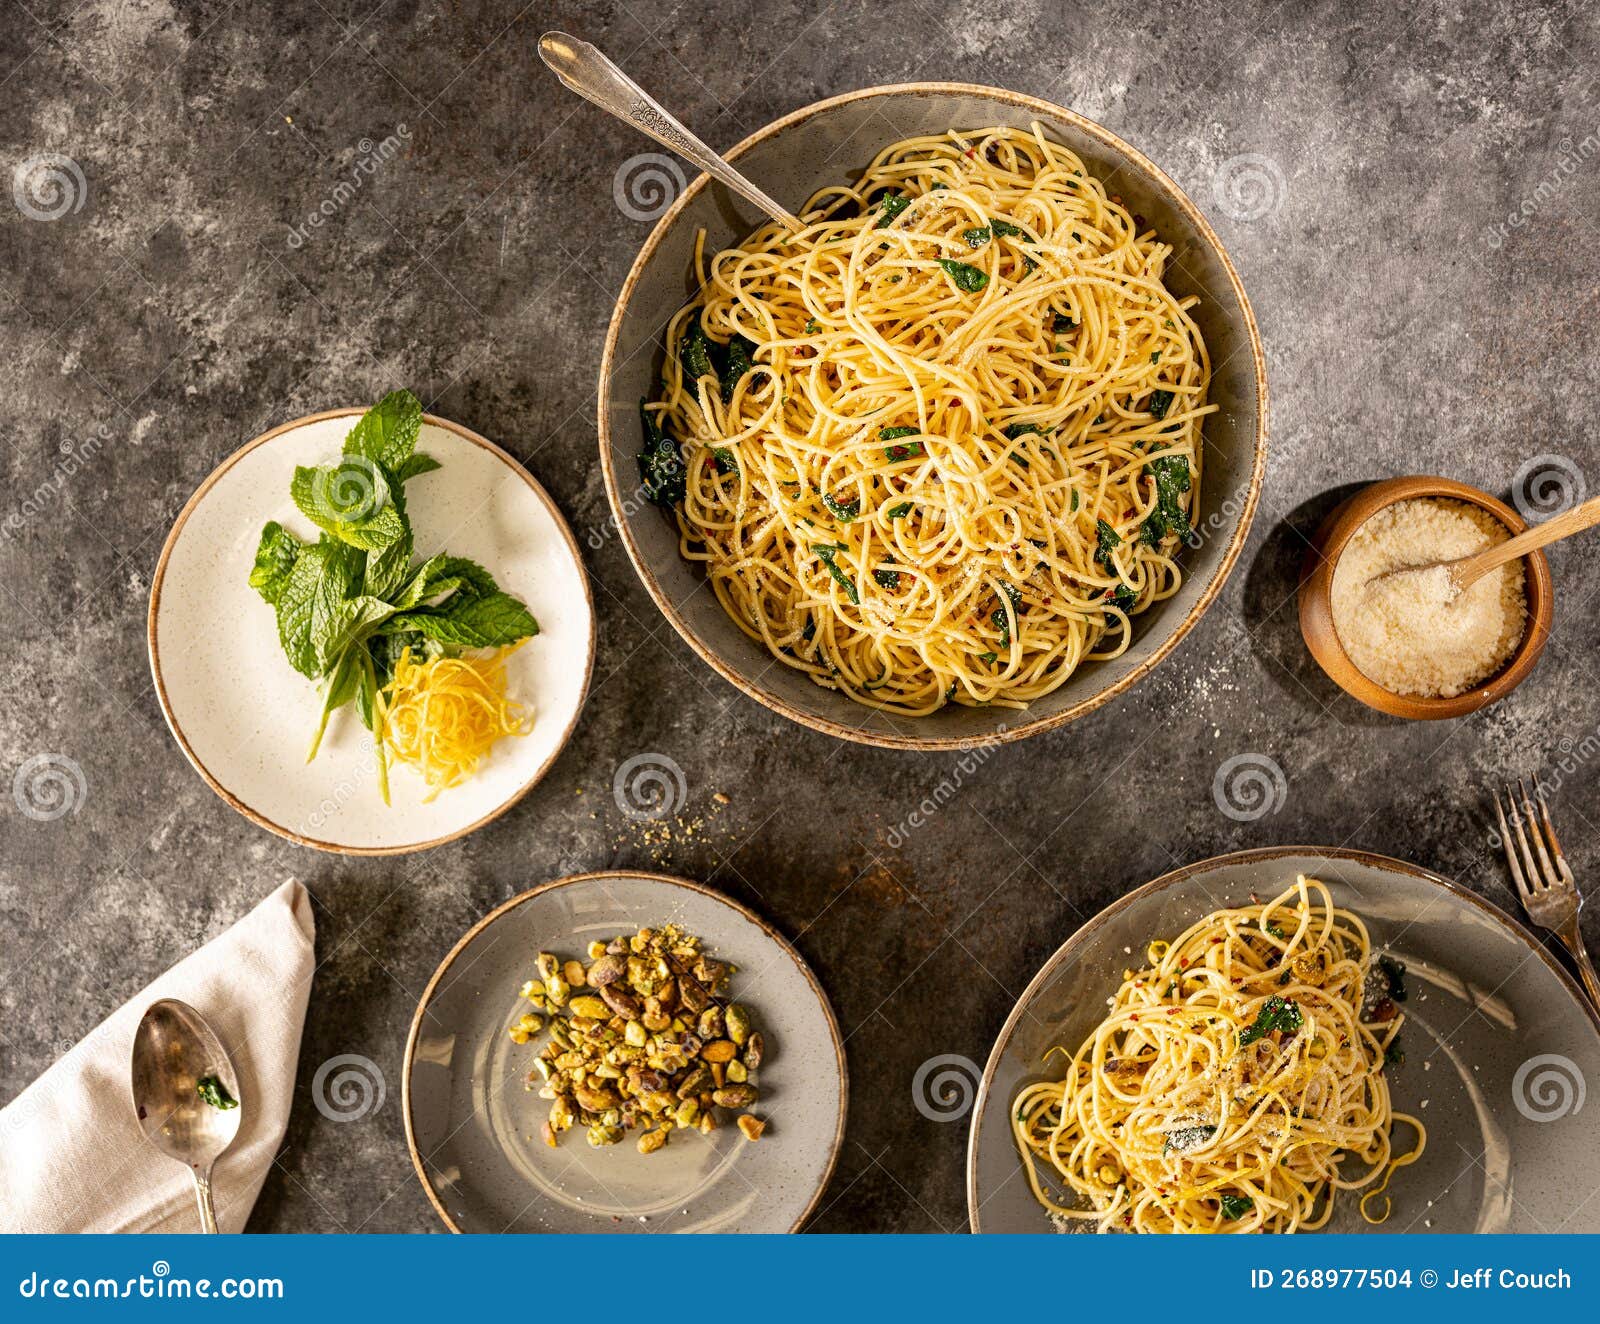 pistachio spaghetti pasta with fresh lemon zest